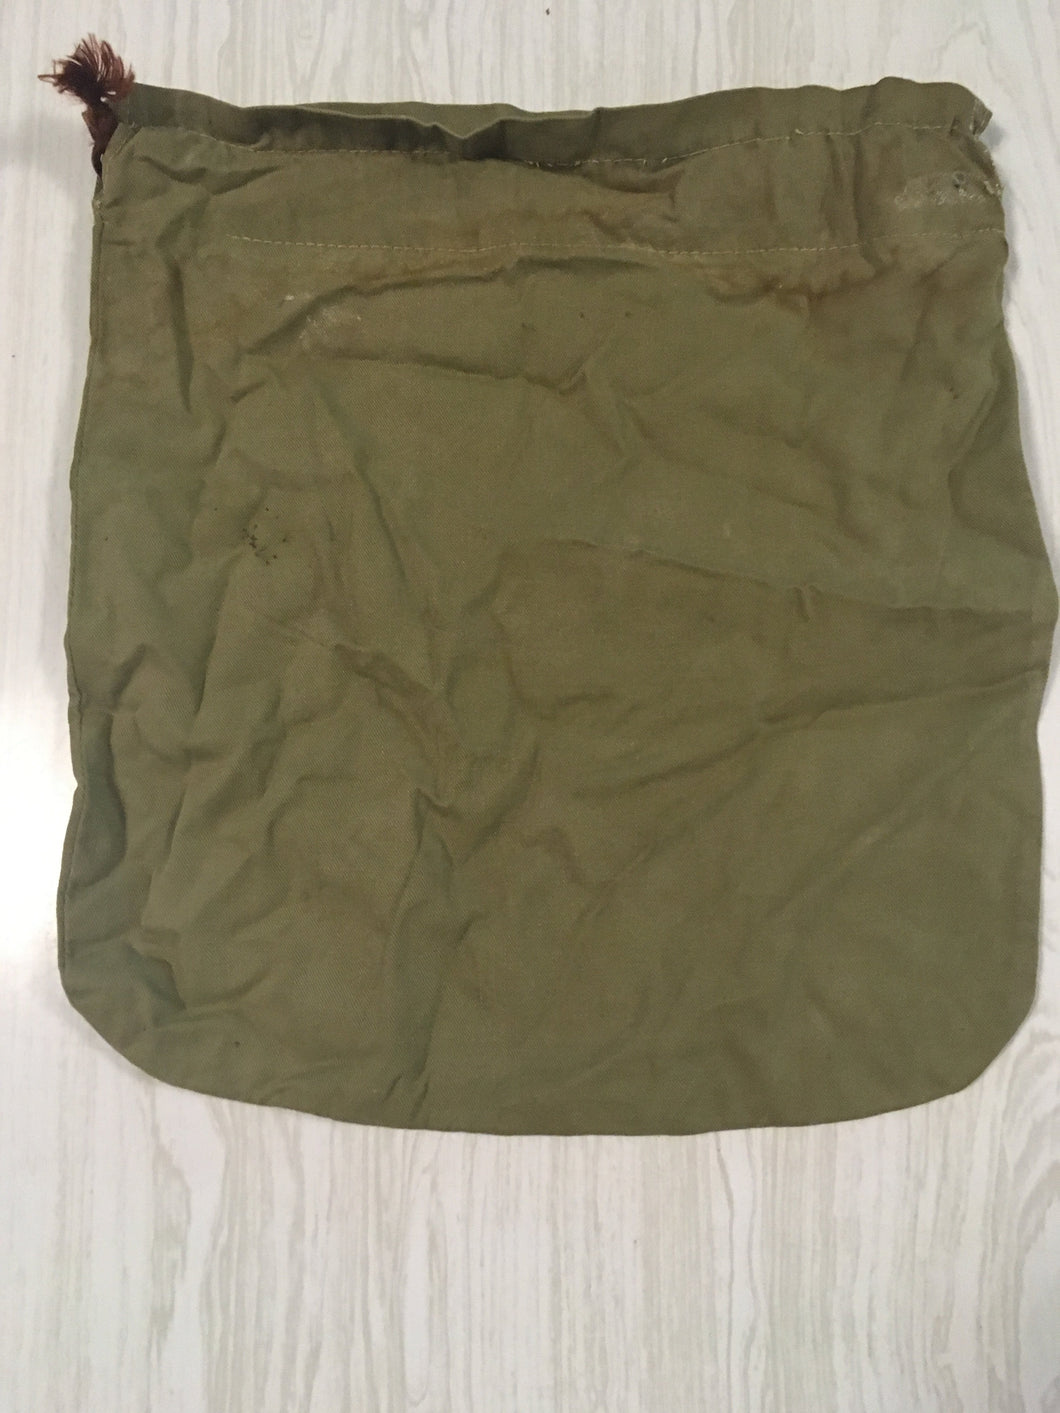 Vintage Military 12 inch x 11 inch drawstring cotton bag